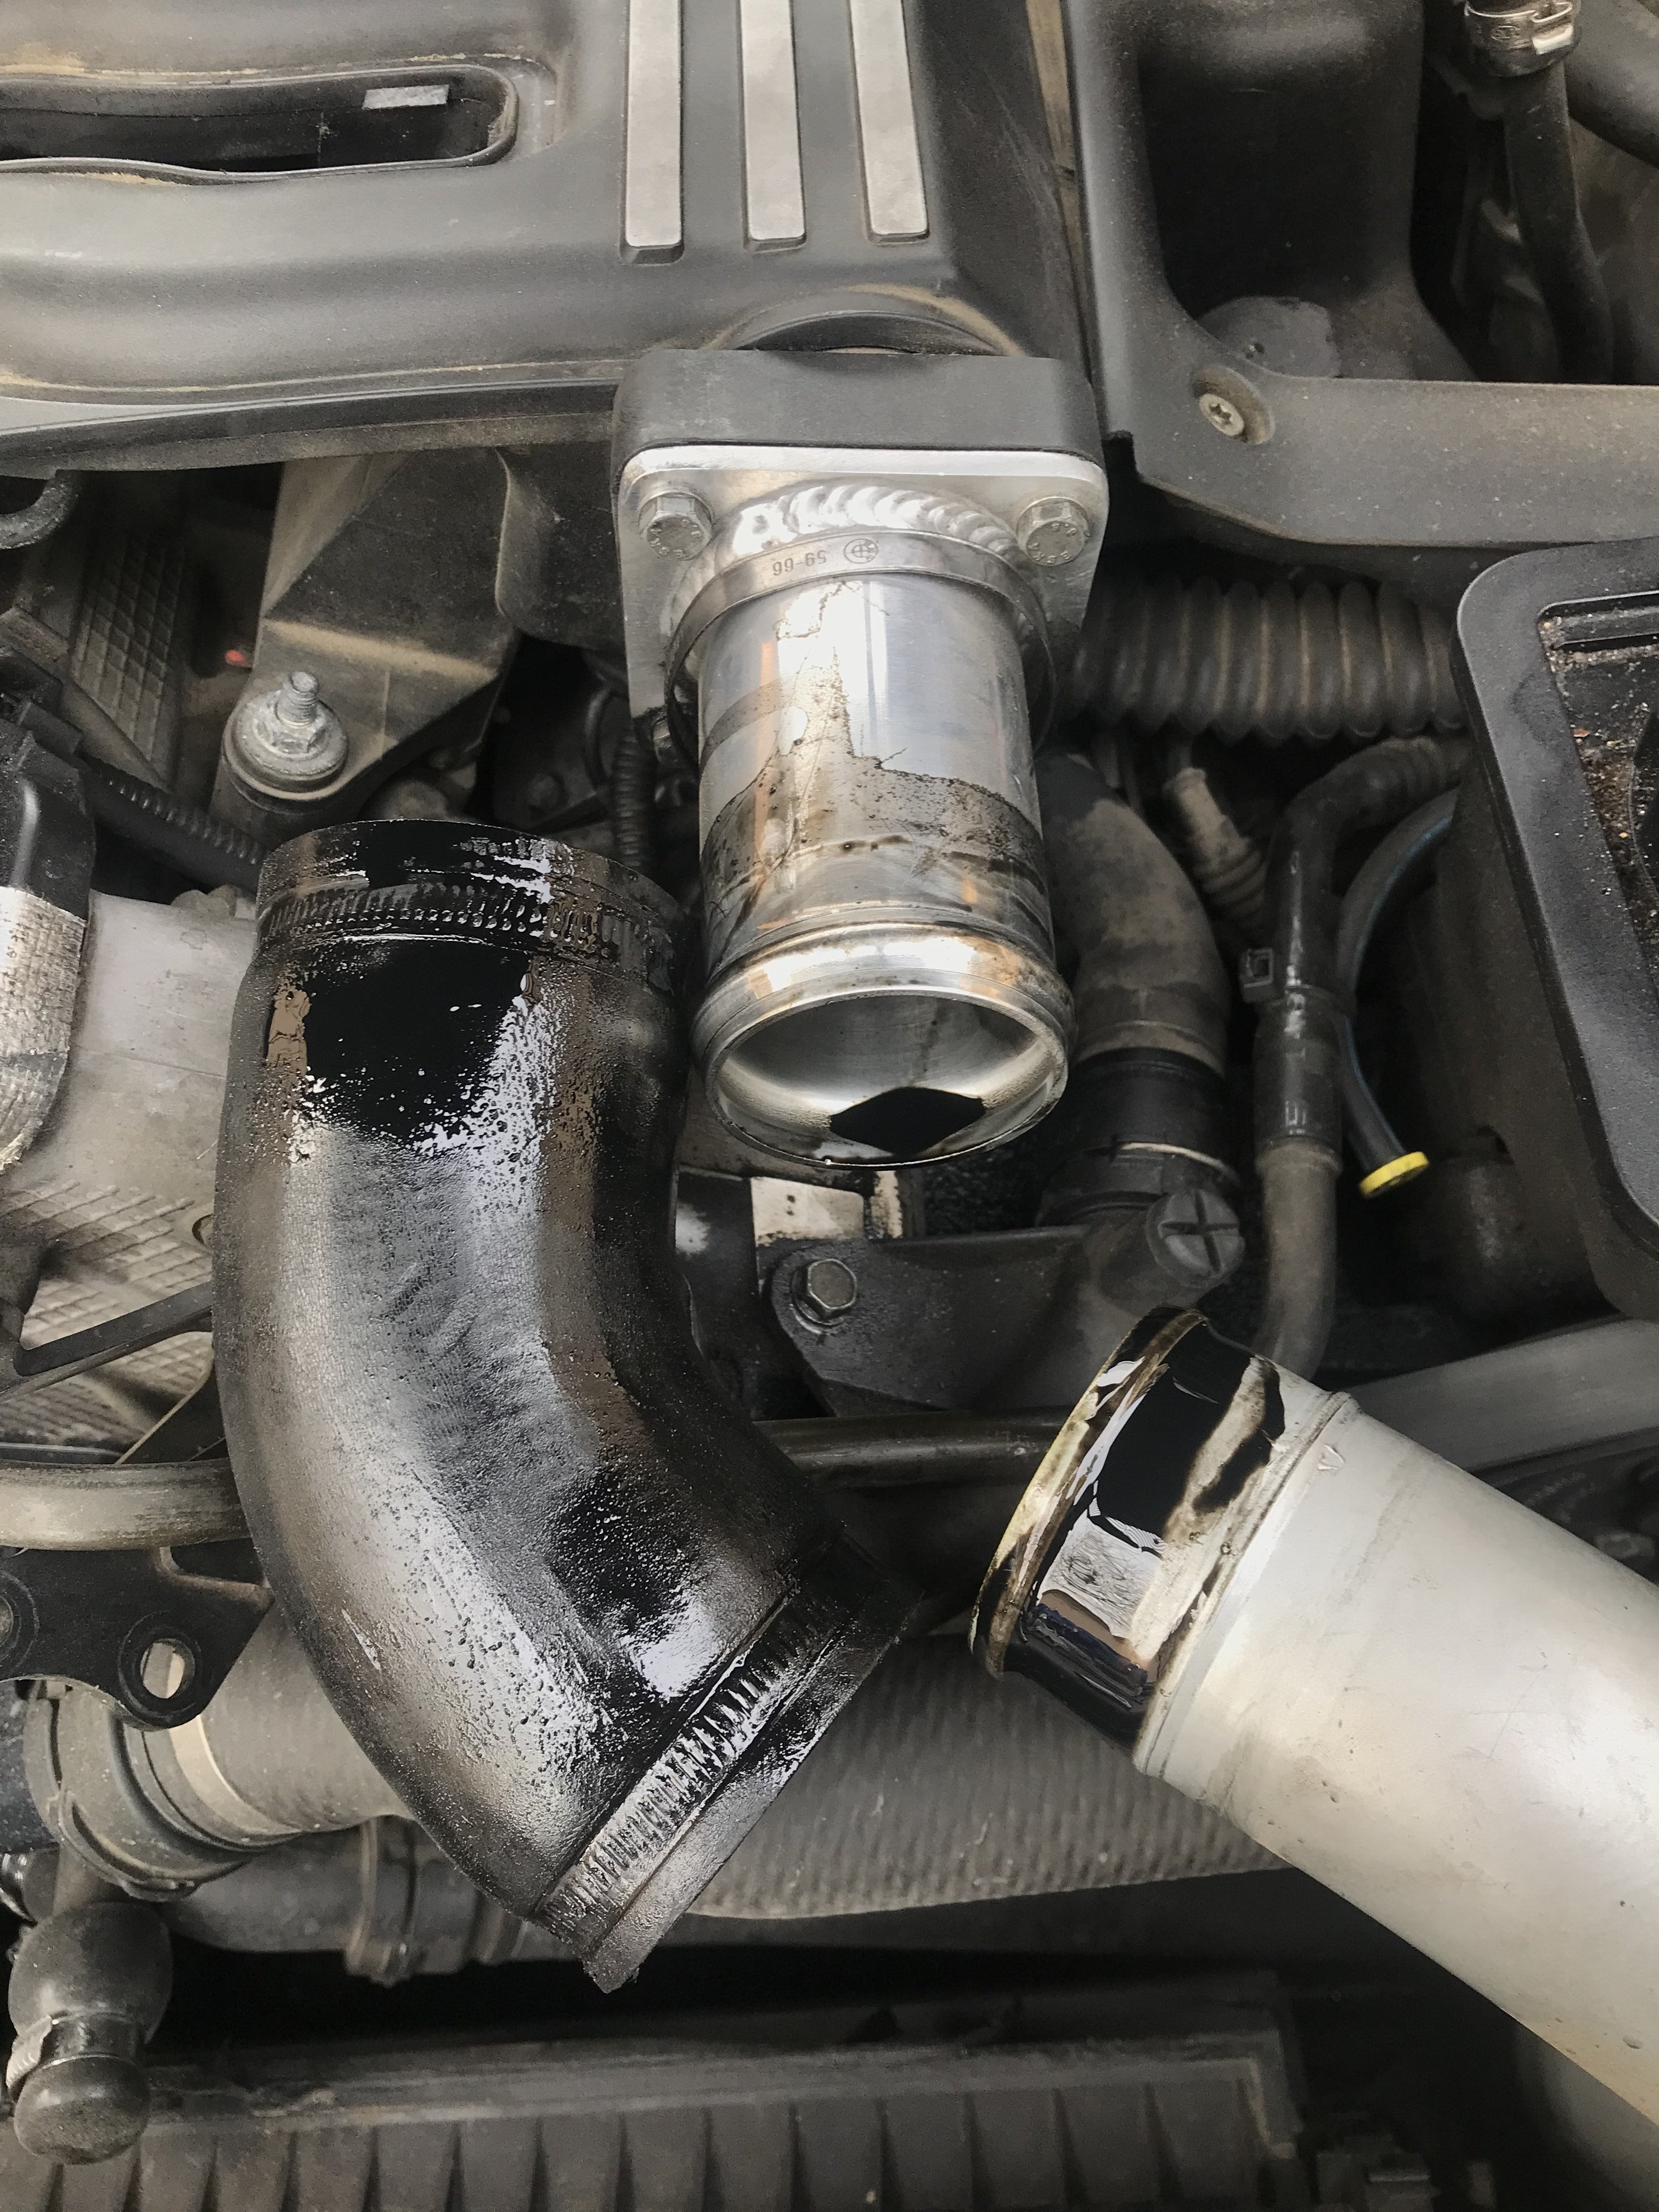 Oil inside the intake (BMW E46 320D M47)